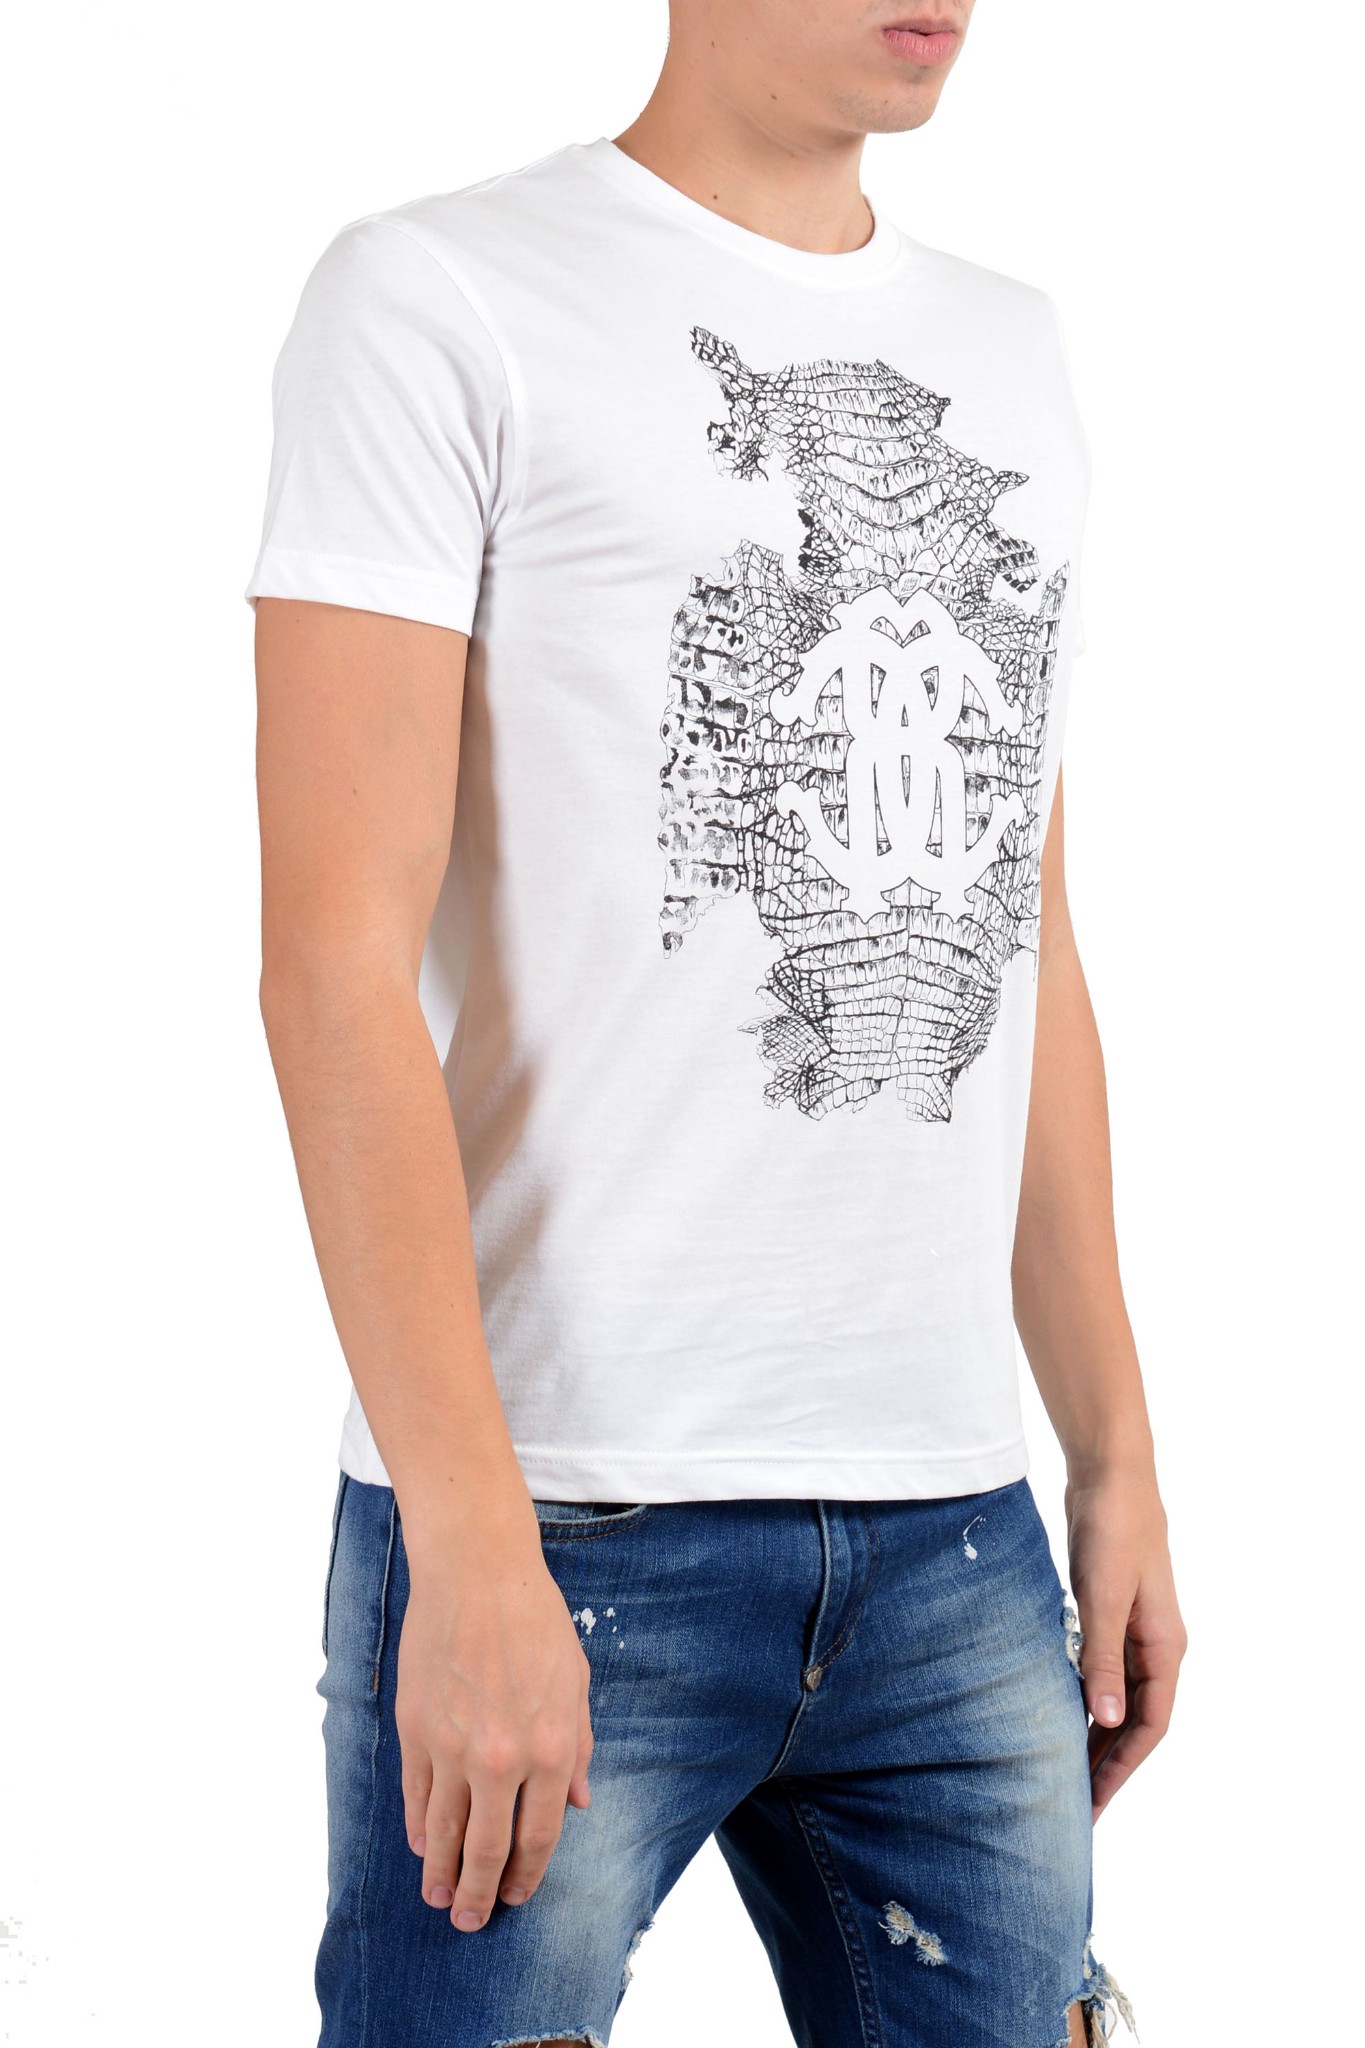 Roberto Cavalli Men's White Graphic Crewneck T-Shirt Size S M L XL 2XL ...